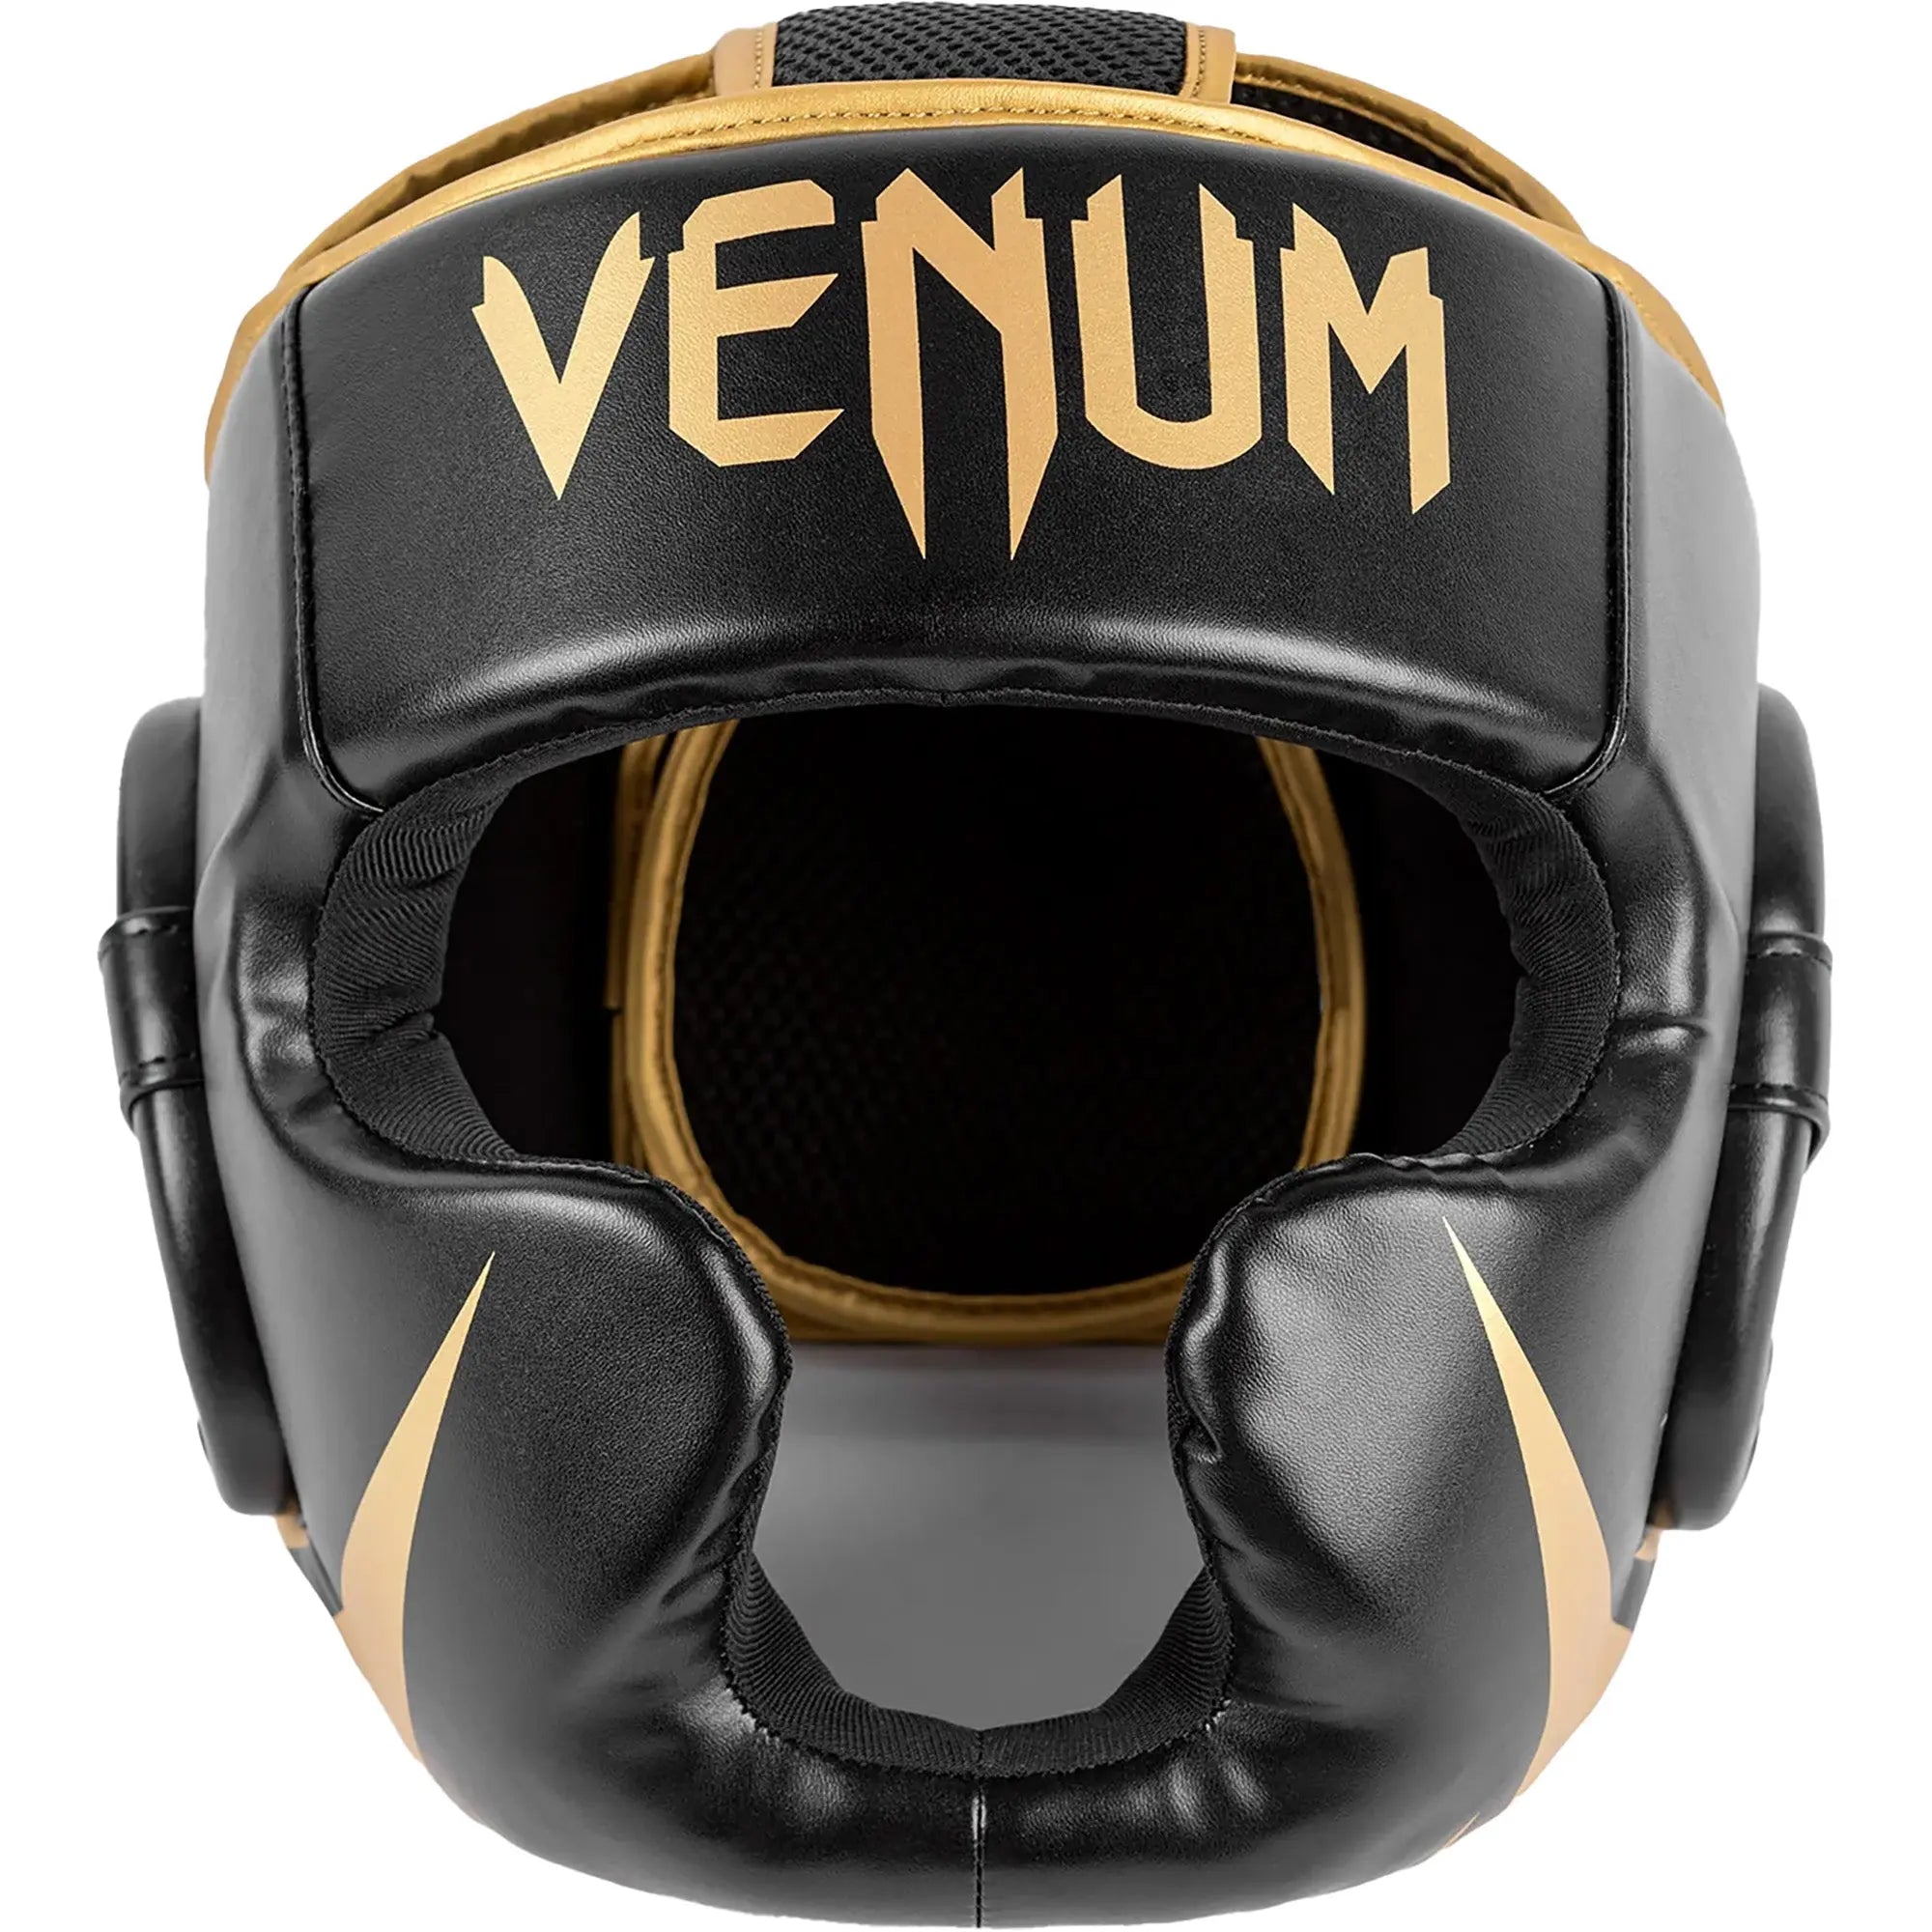 Venum Challenger 2.0 Boxing and MMA Training Headgear - Black/Gold Venum